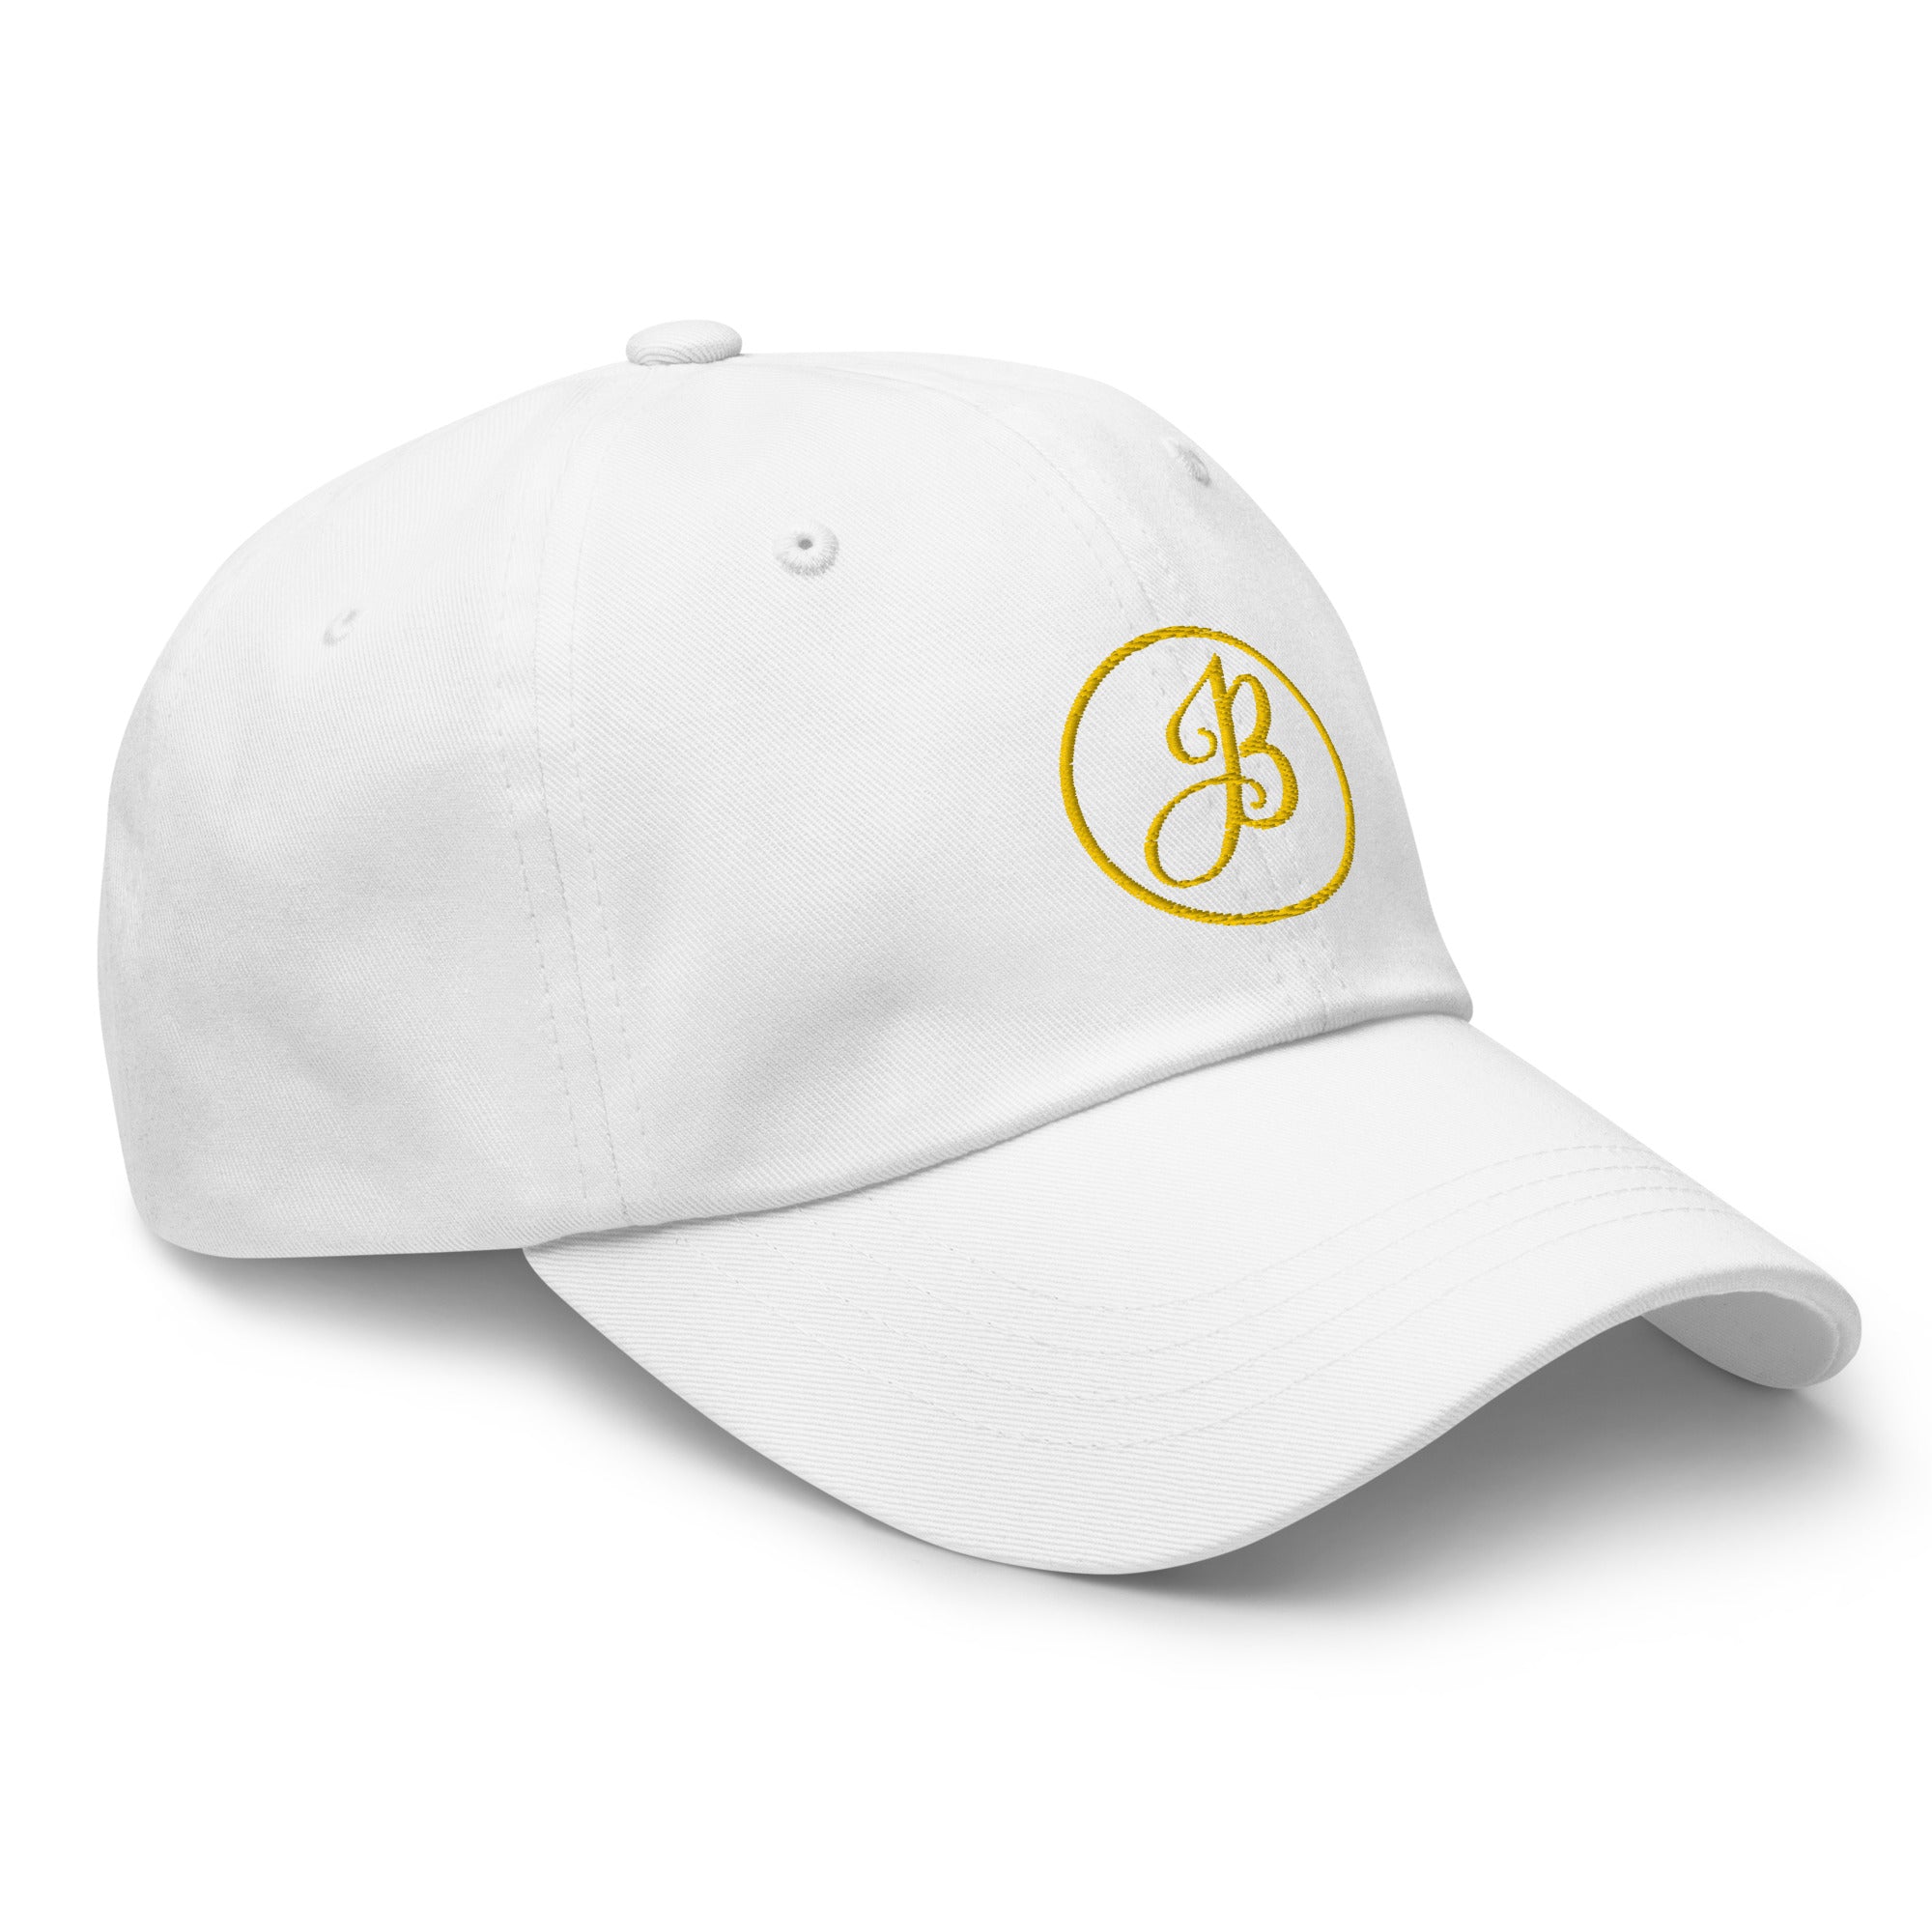 JB Gold White Dad hat